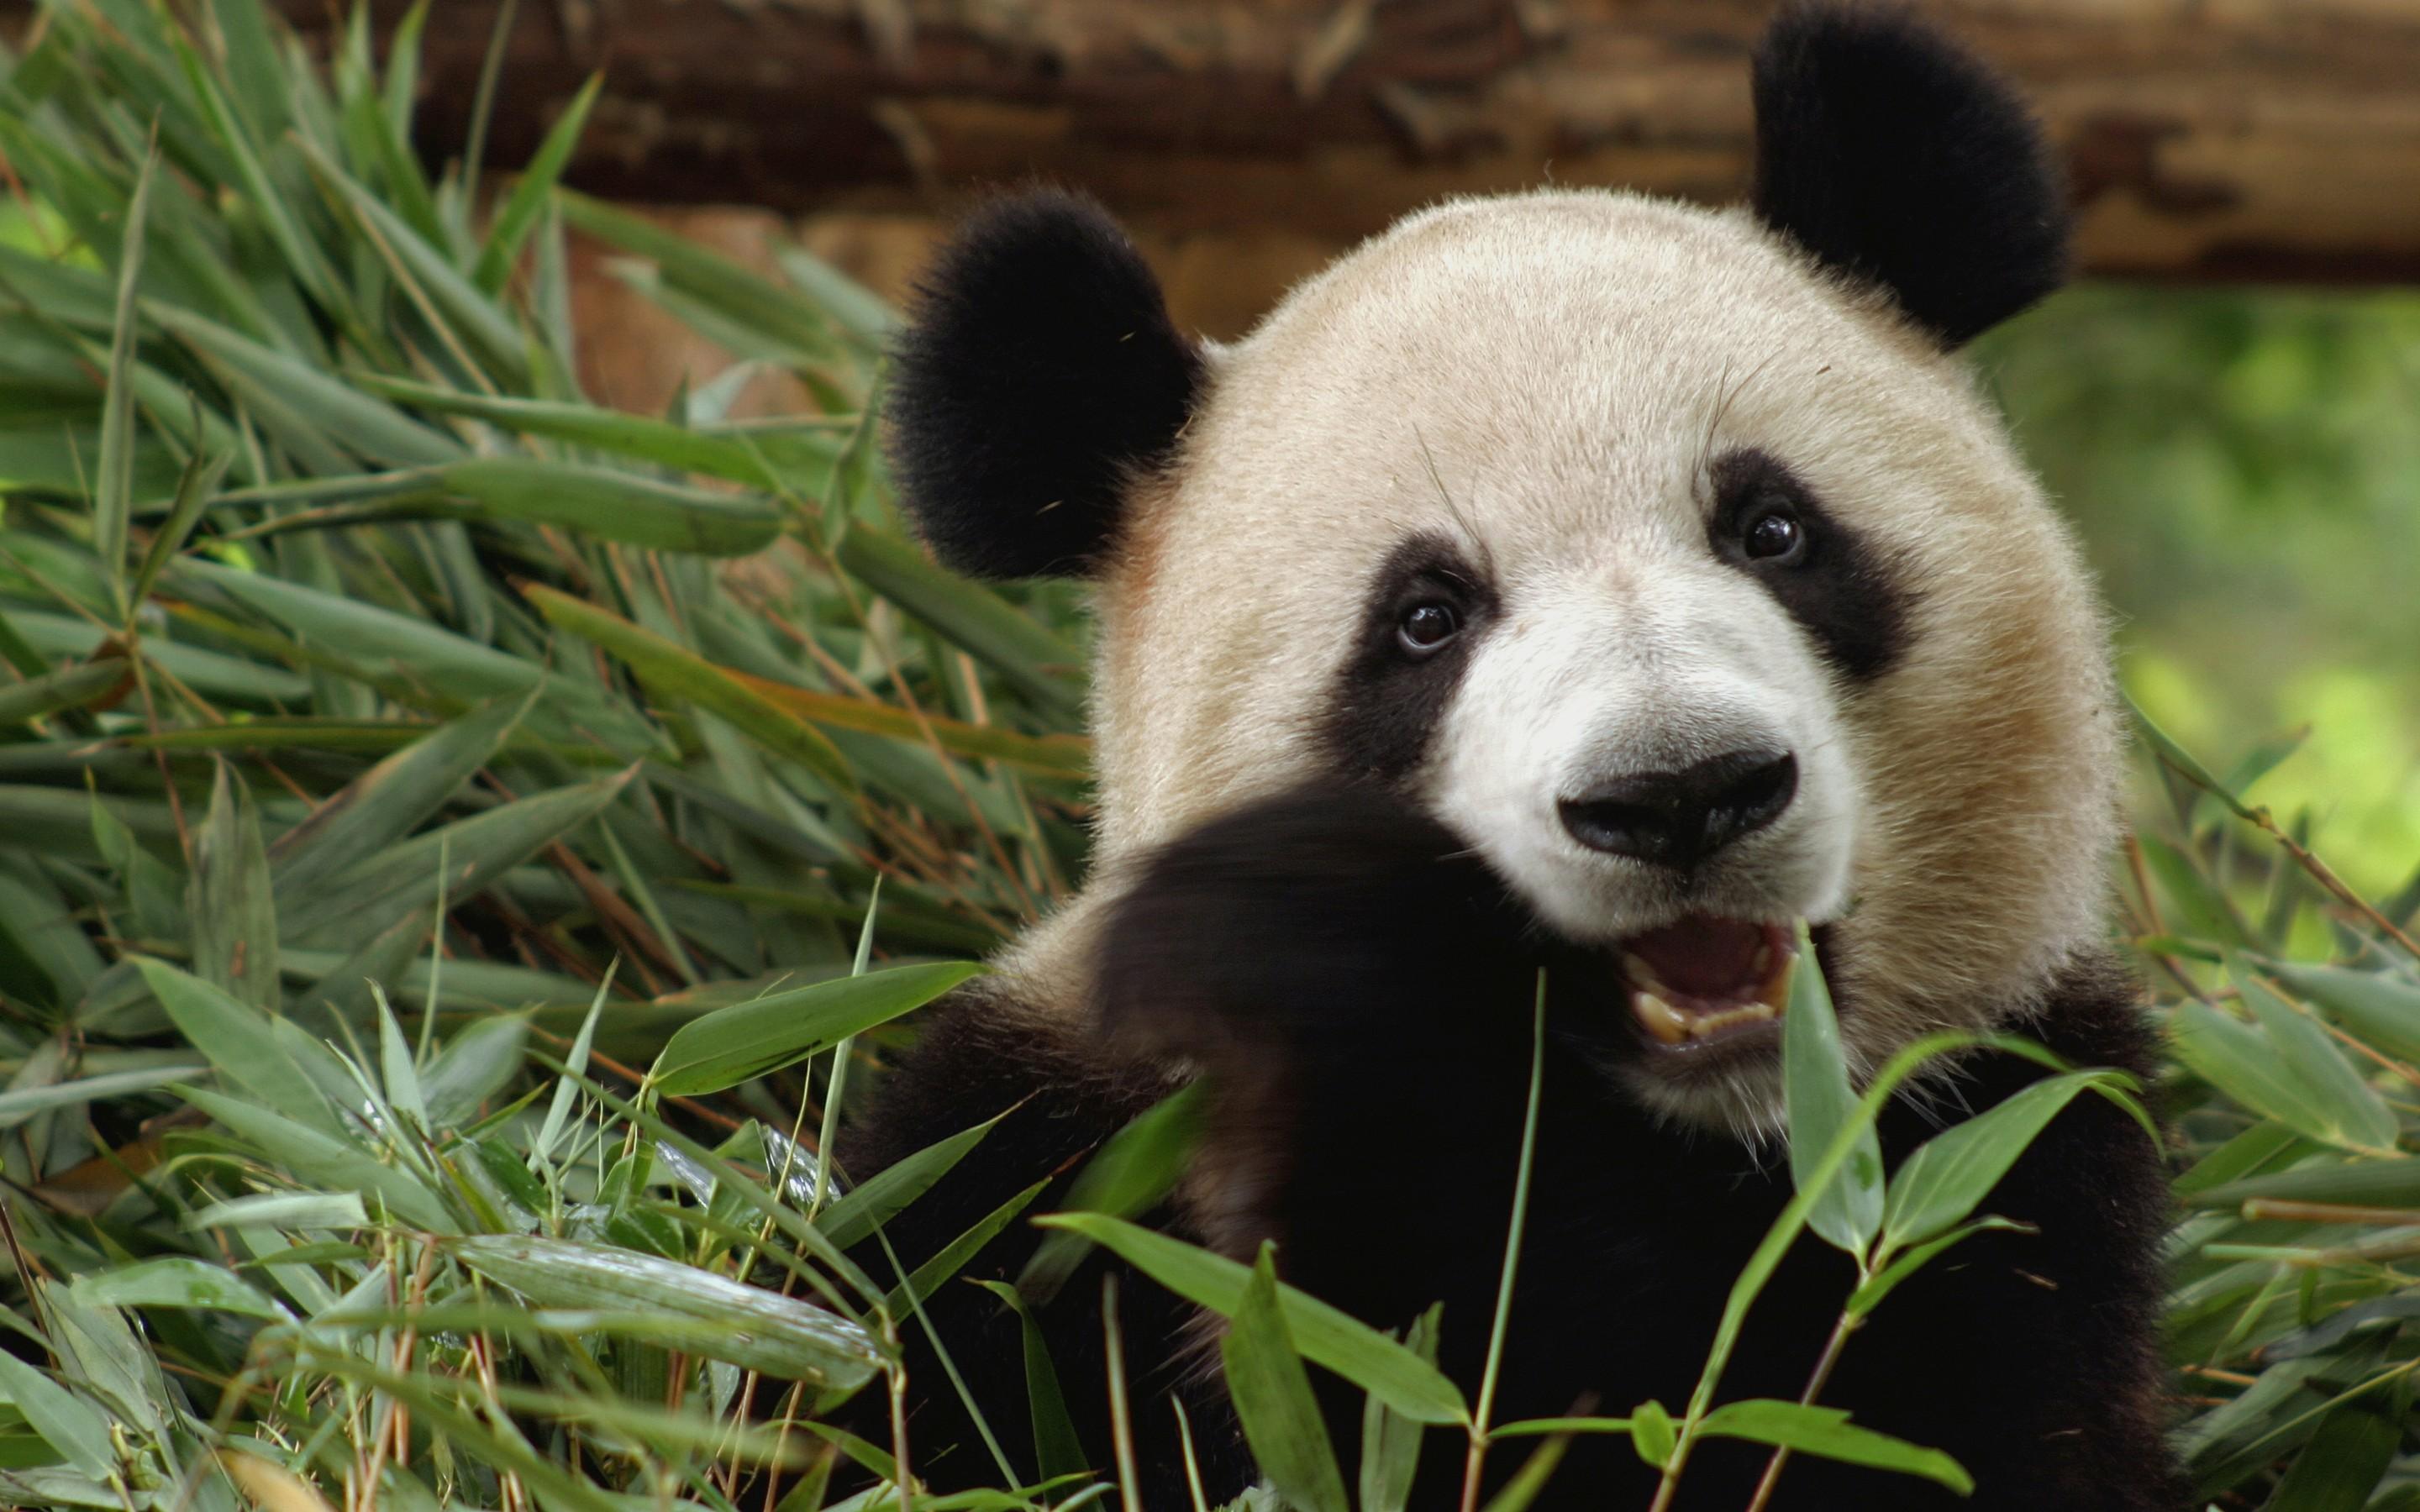 Giant Panda Eating Bamboo, Wolong Nature Reserve, Sichuan, China загрузить